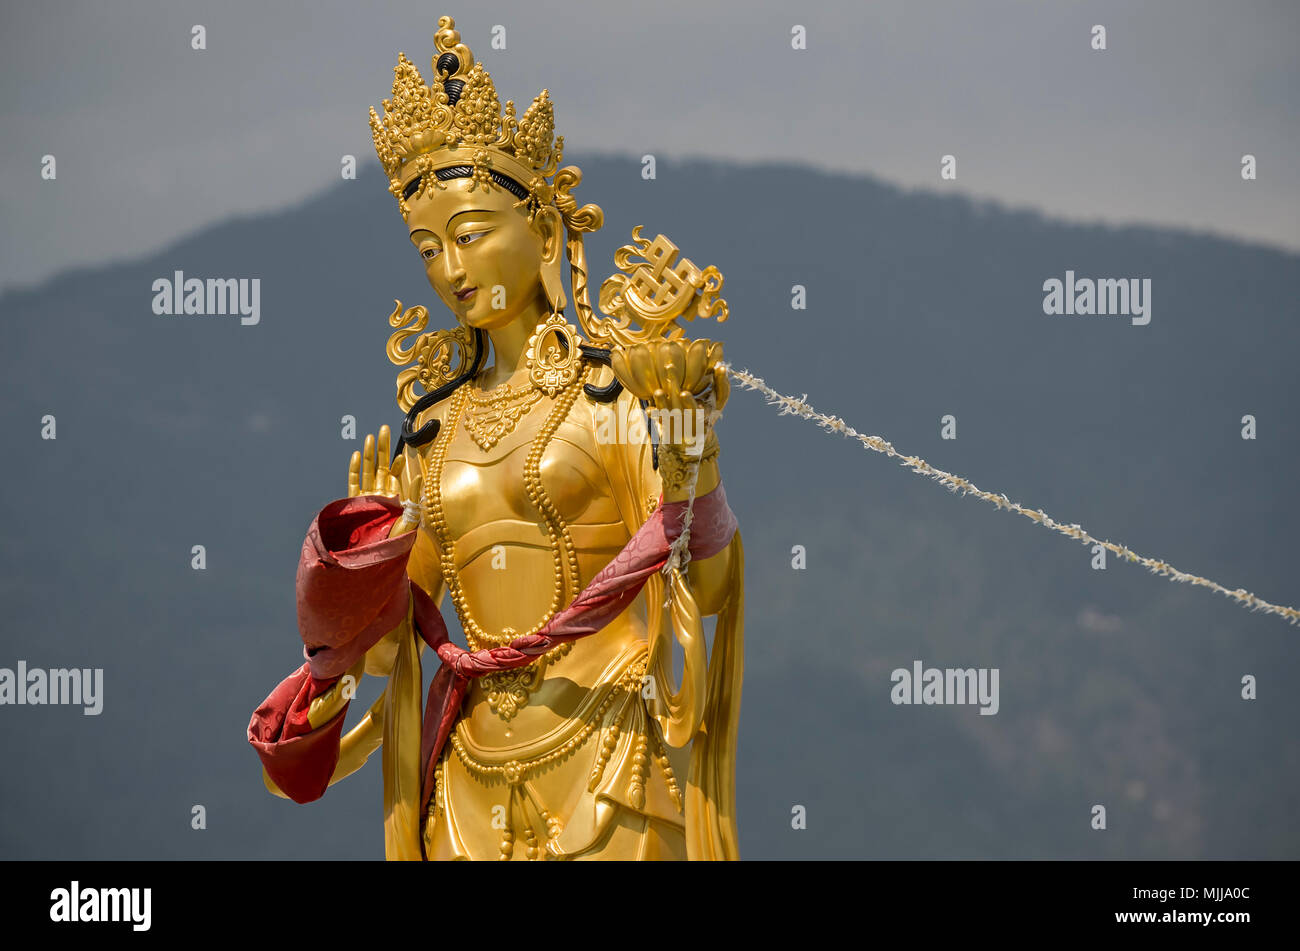 Statuen der buddhistischen Göttinnen am oberen Hügel in Kuenselphodrang Natur Park, Thimpu, Bhutan - Göttinnen Statuen in der Buddha Dordenma Website Stockfoto